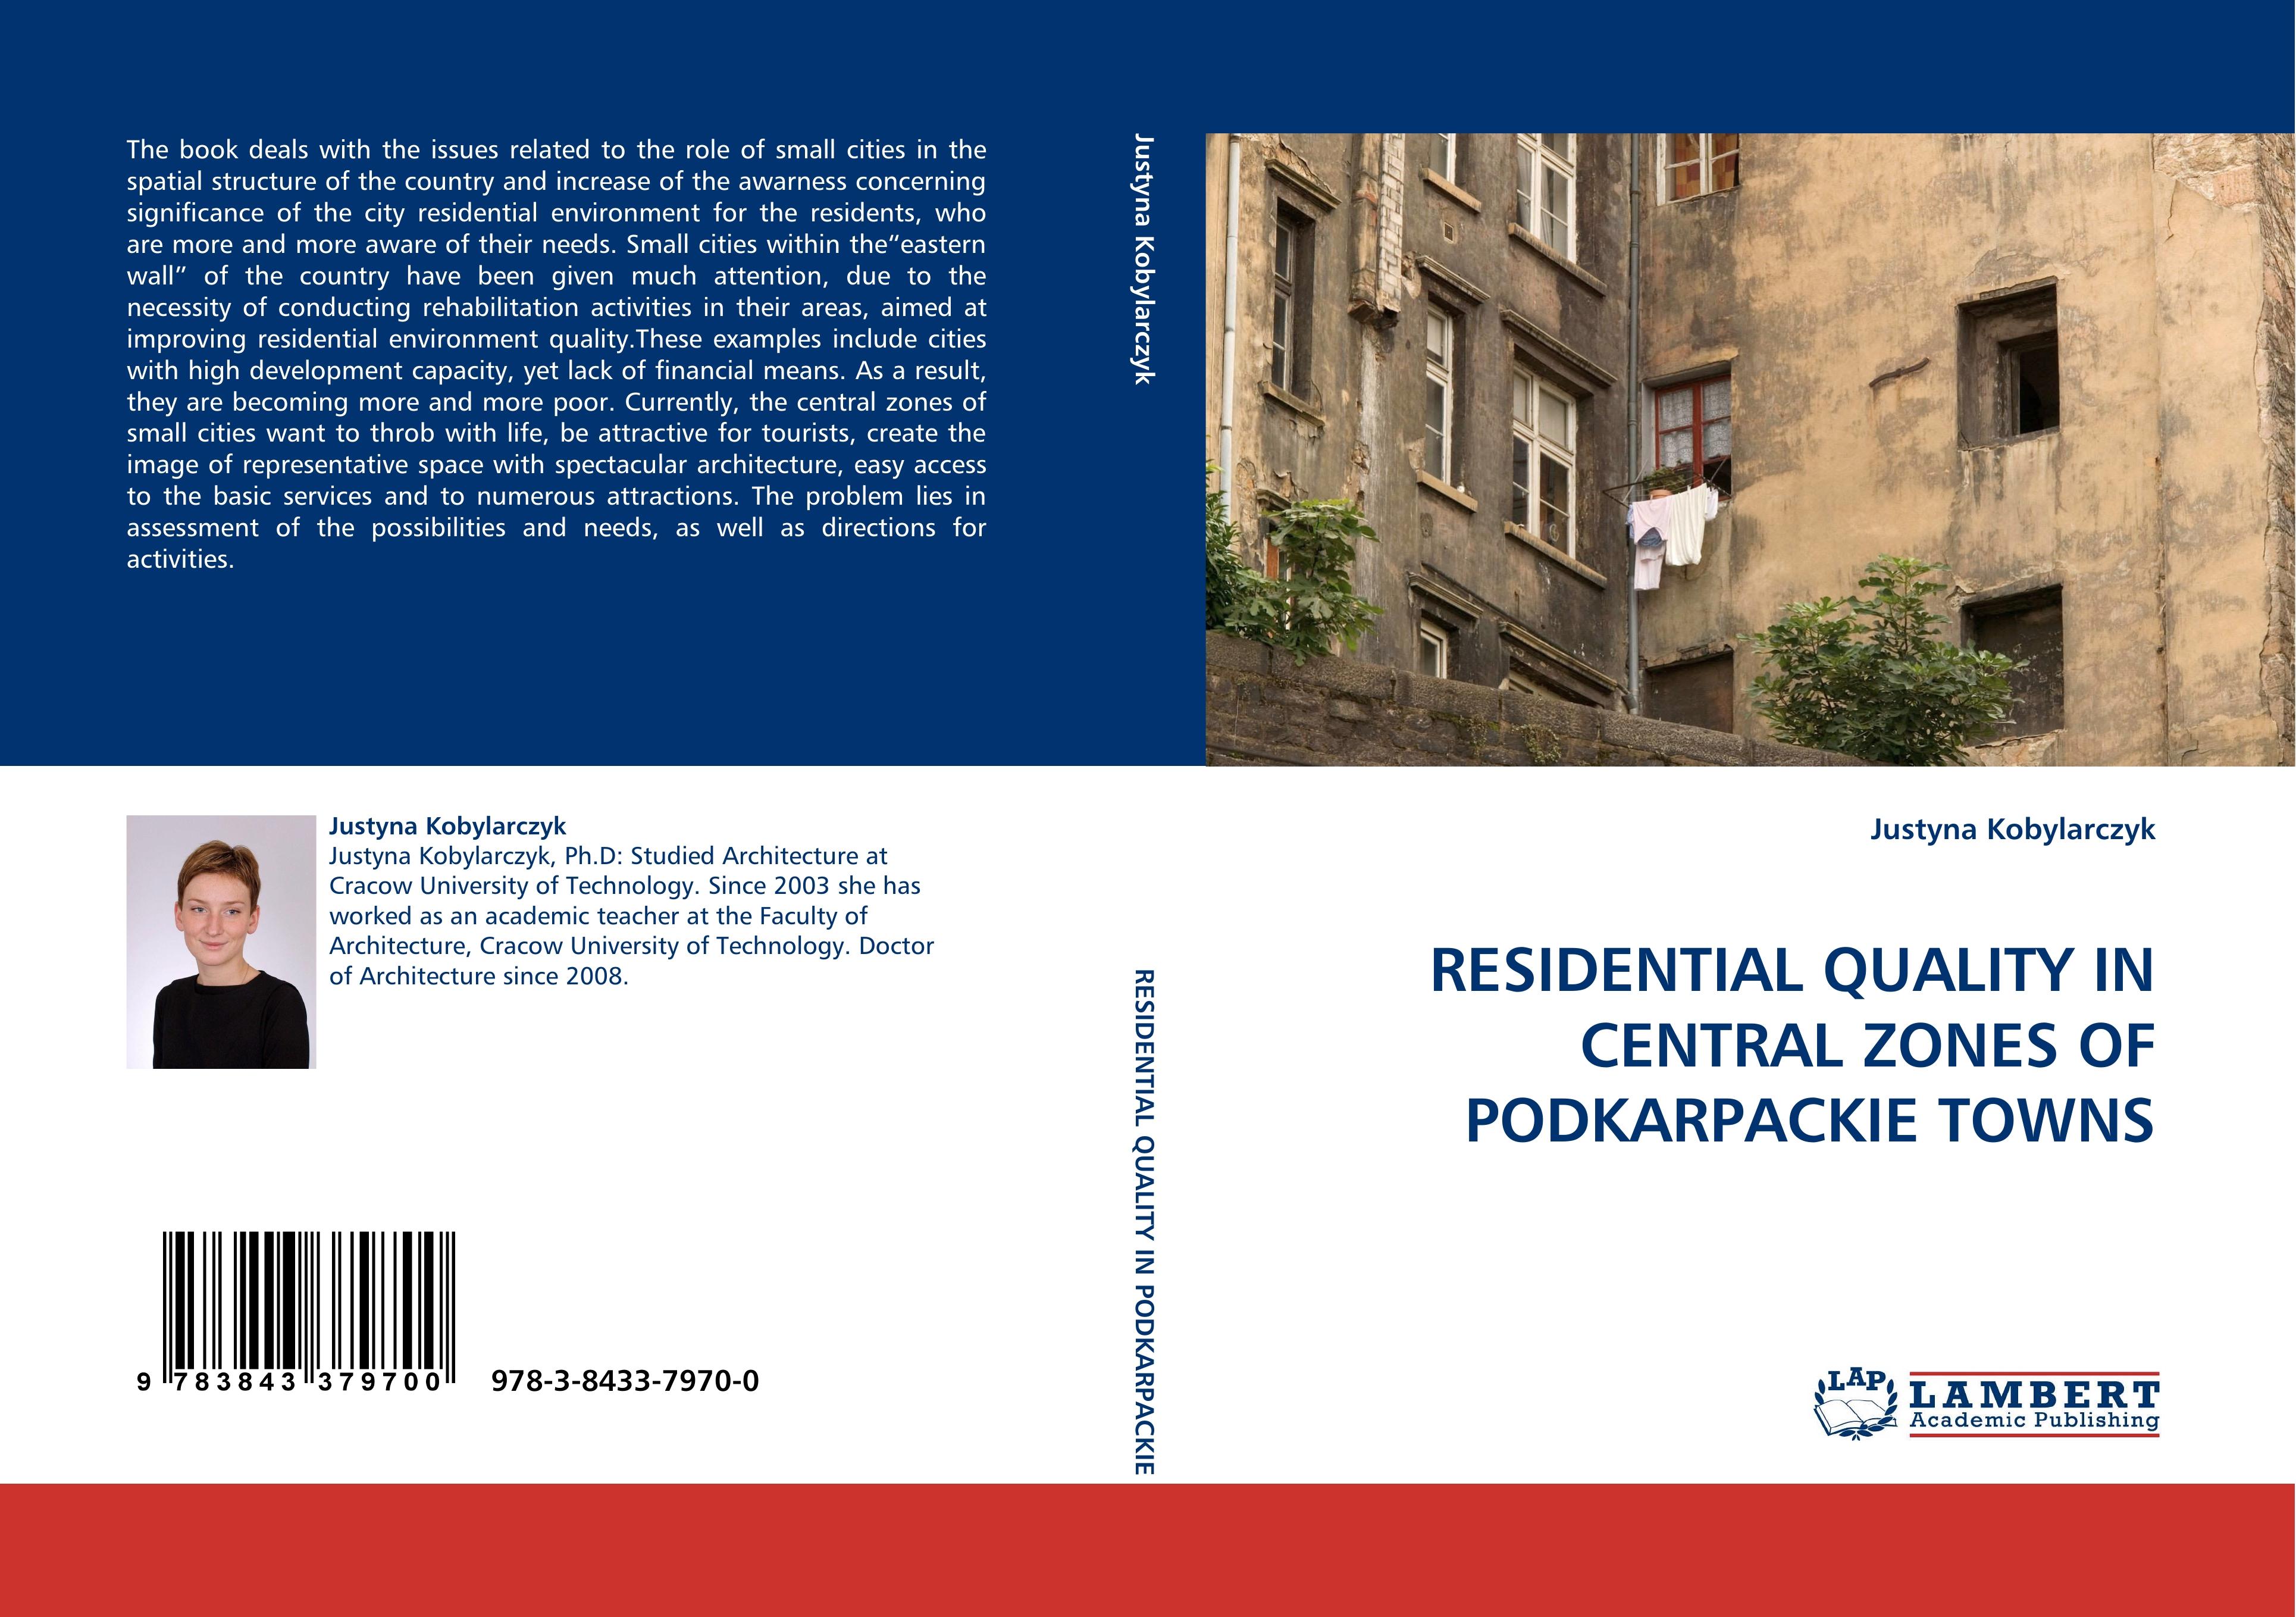 RESIDENTIAL QUALITY IN CENTRAL ZONES OF PODKARPACKIE TOWNS  Justyna Kobylarczyk  Taschenbuch  Paperback  Englisch  2010 - Kobylarczyk, Justyna